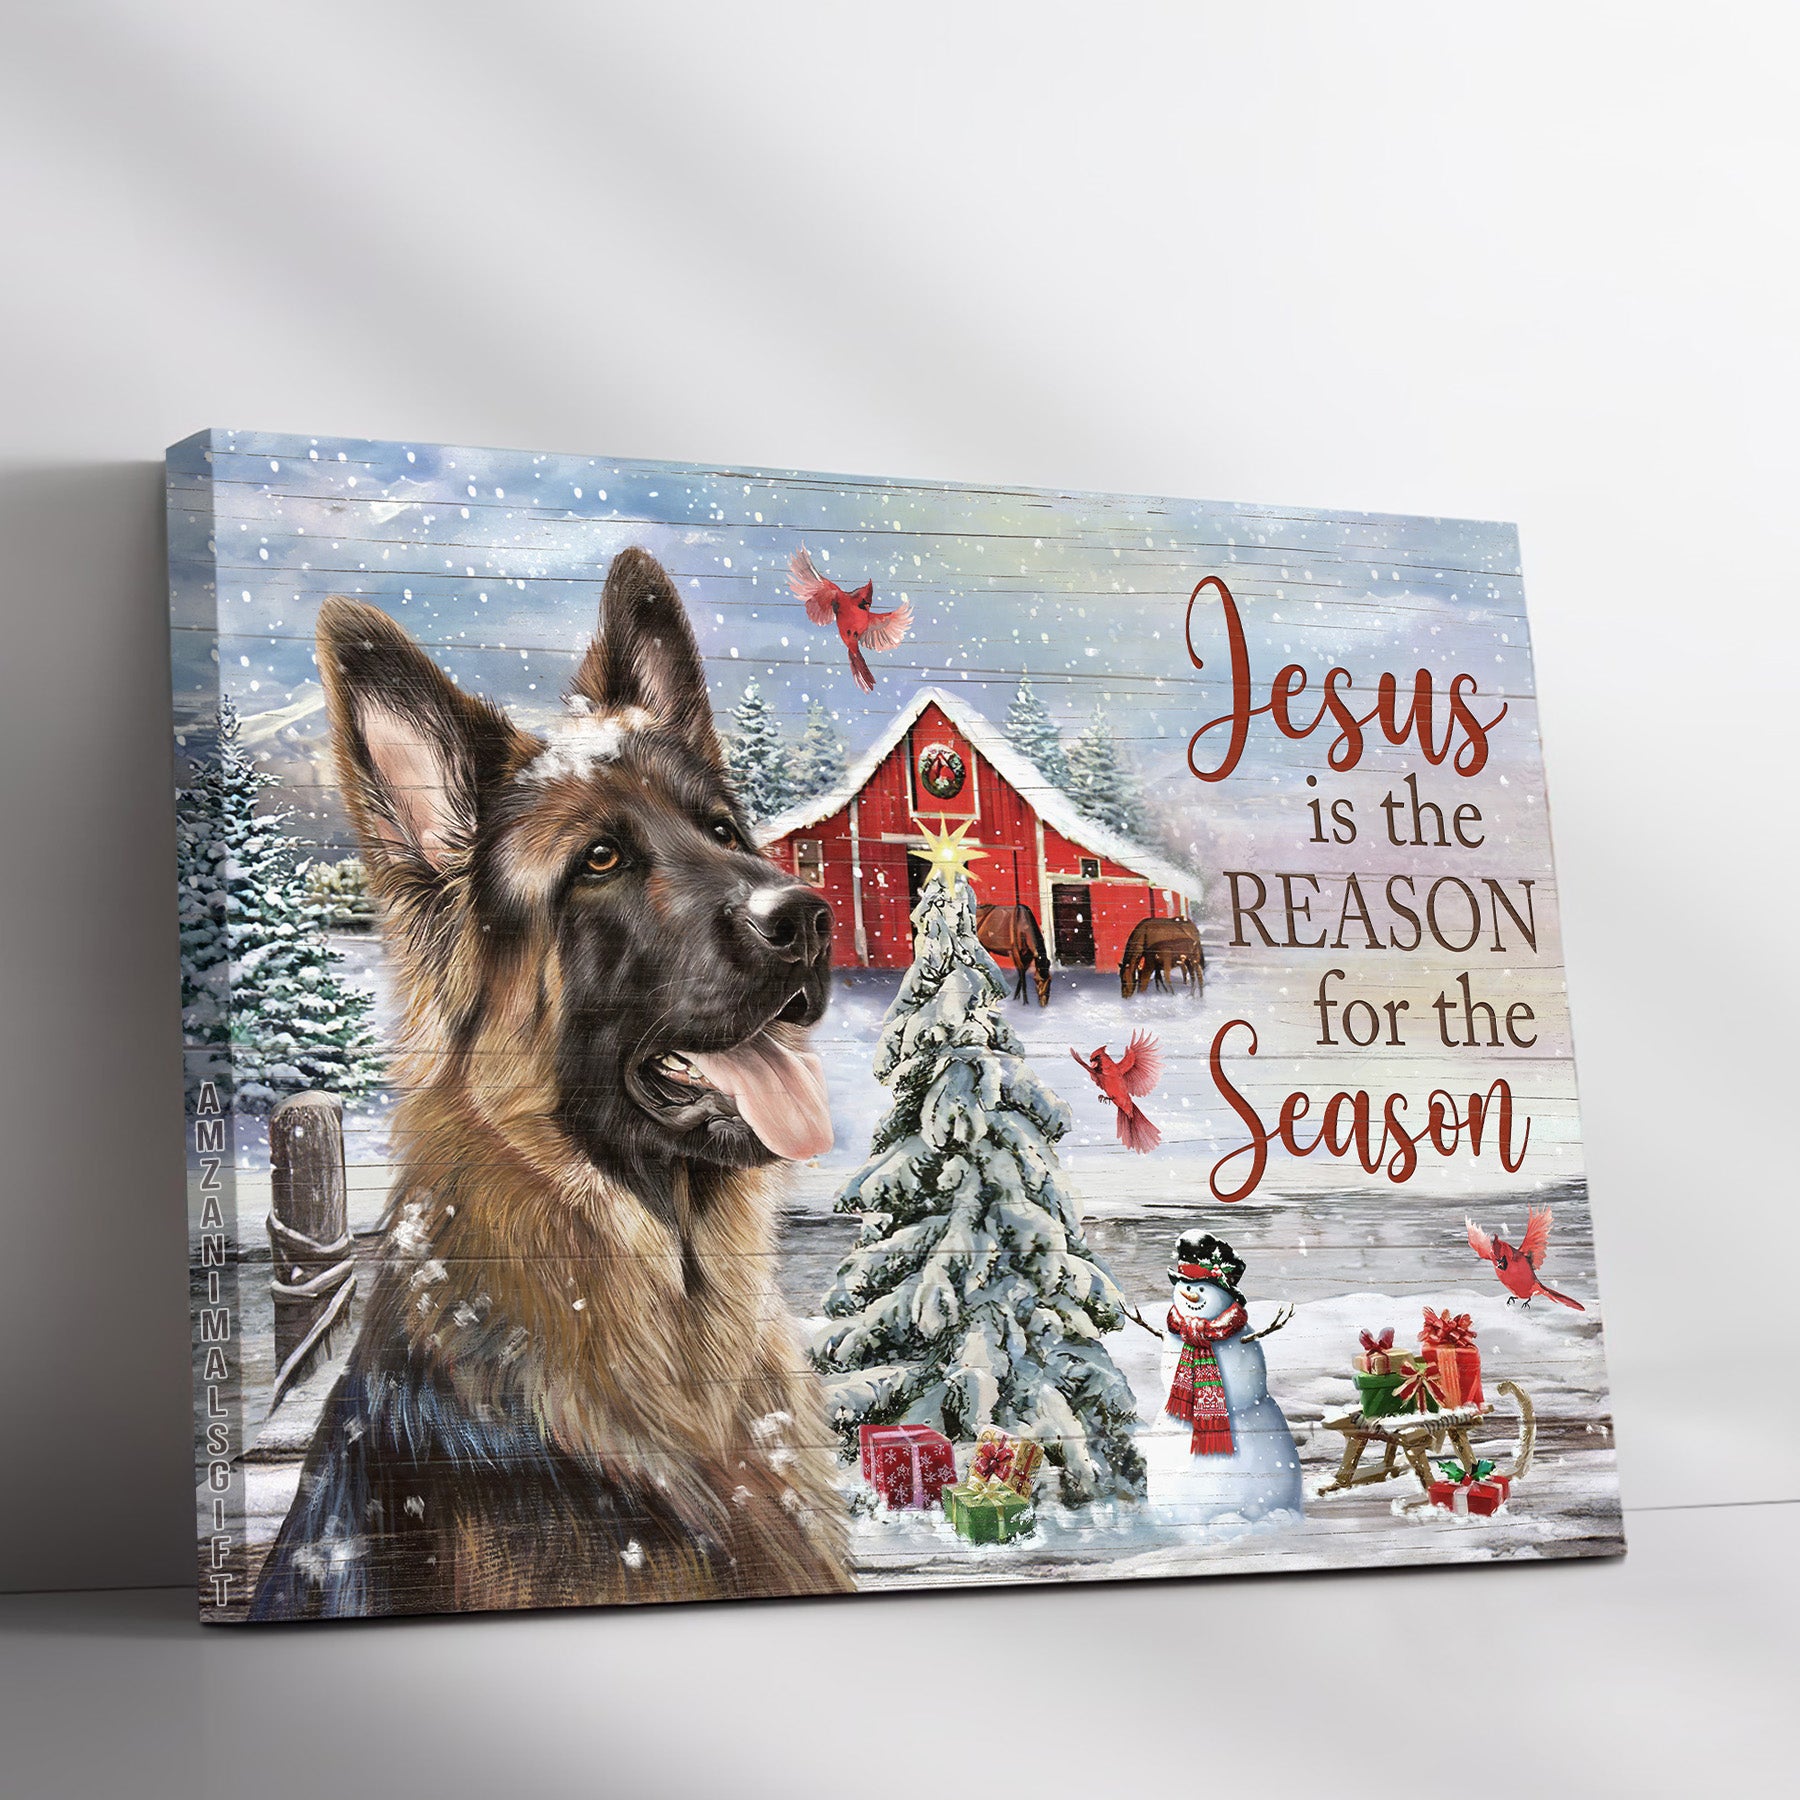 German Shepherd & Jesus Premium Wrapped Landscape Canvas - German Shepherd, Christmas, Cardinal, Jesus Is The Reason For The Season - Gift For Christian